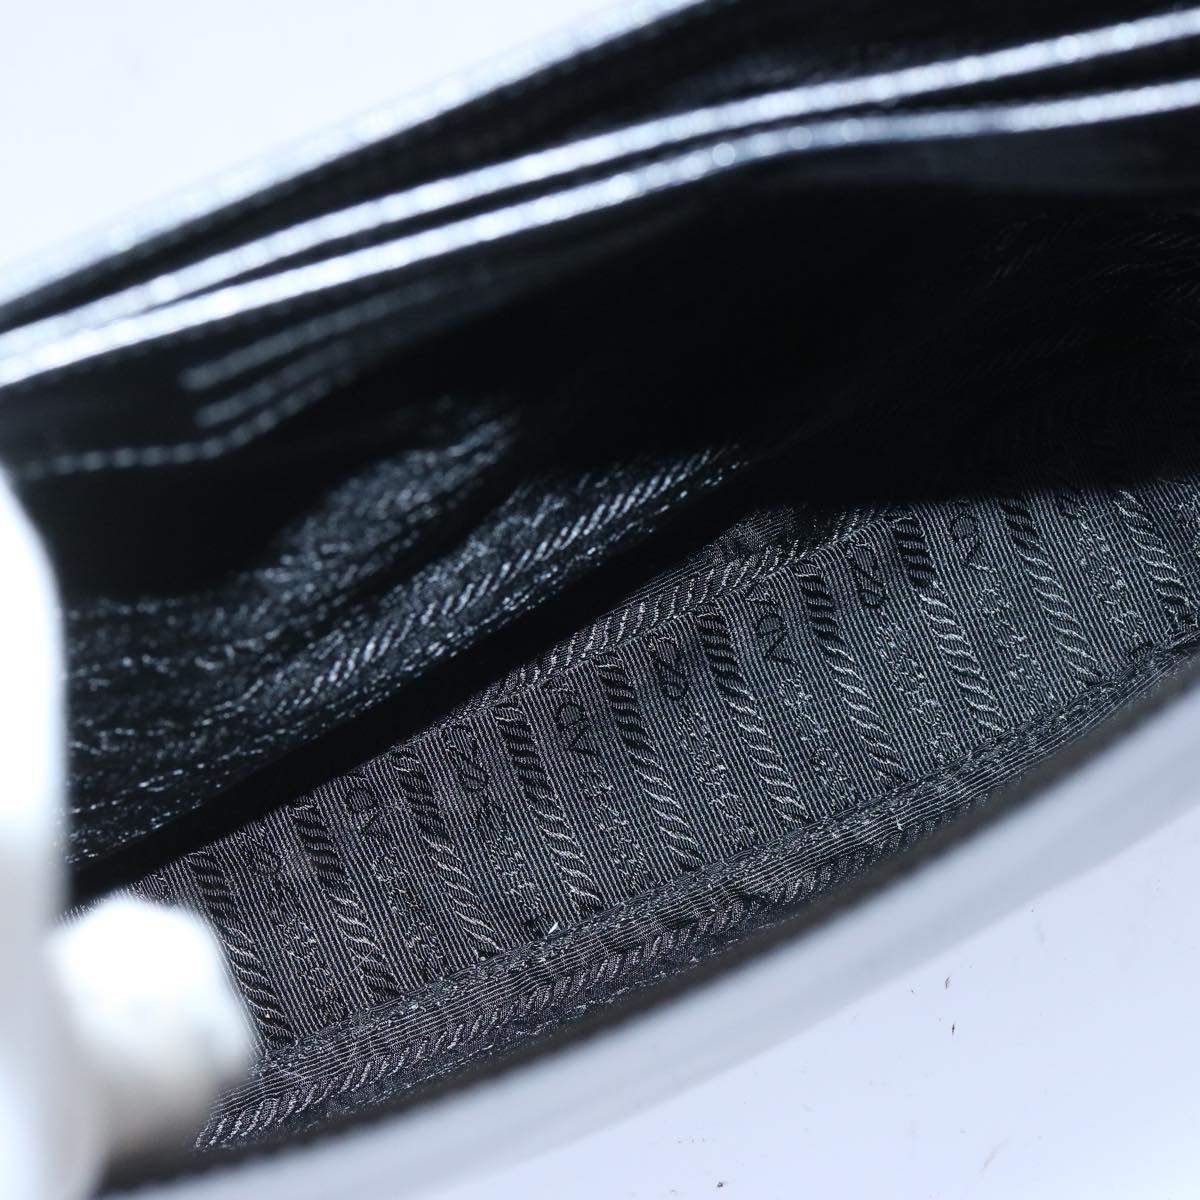 PRADA Shoulder Bag Patent leather Black Auth yk10456